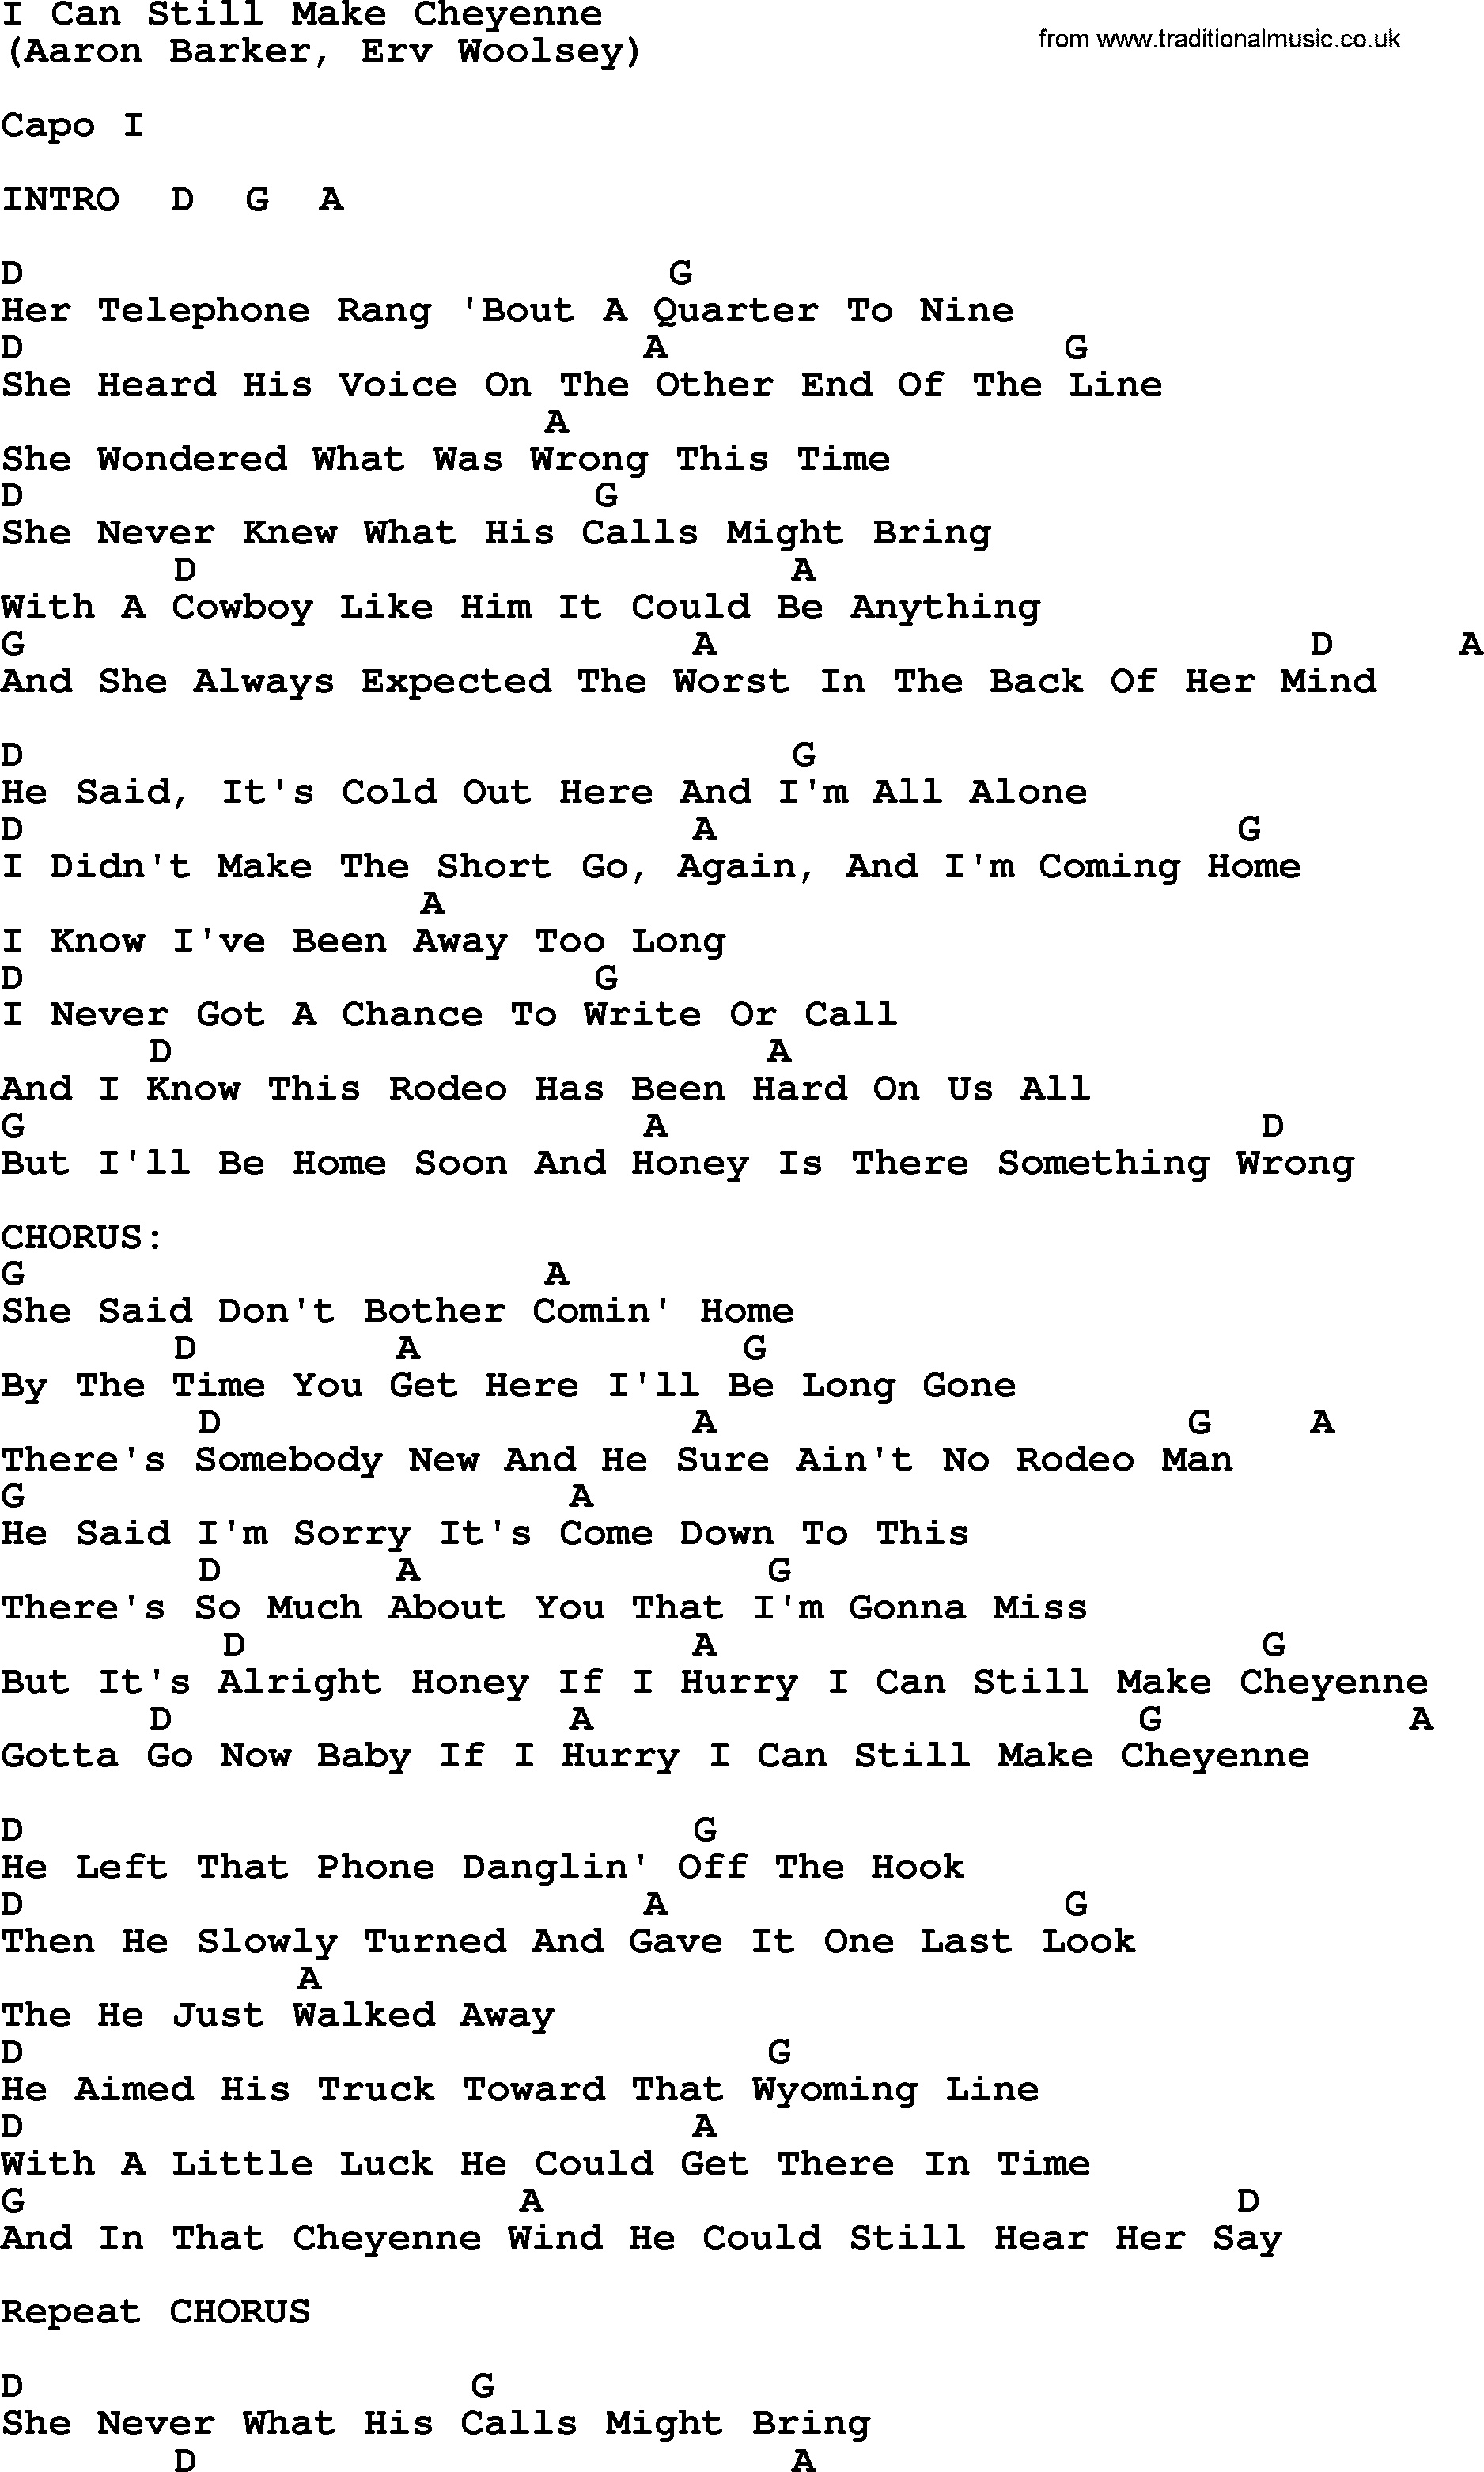 George Strait song: I Can Still Make Cheyenne, lyrics and chords